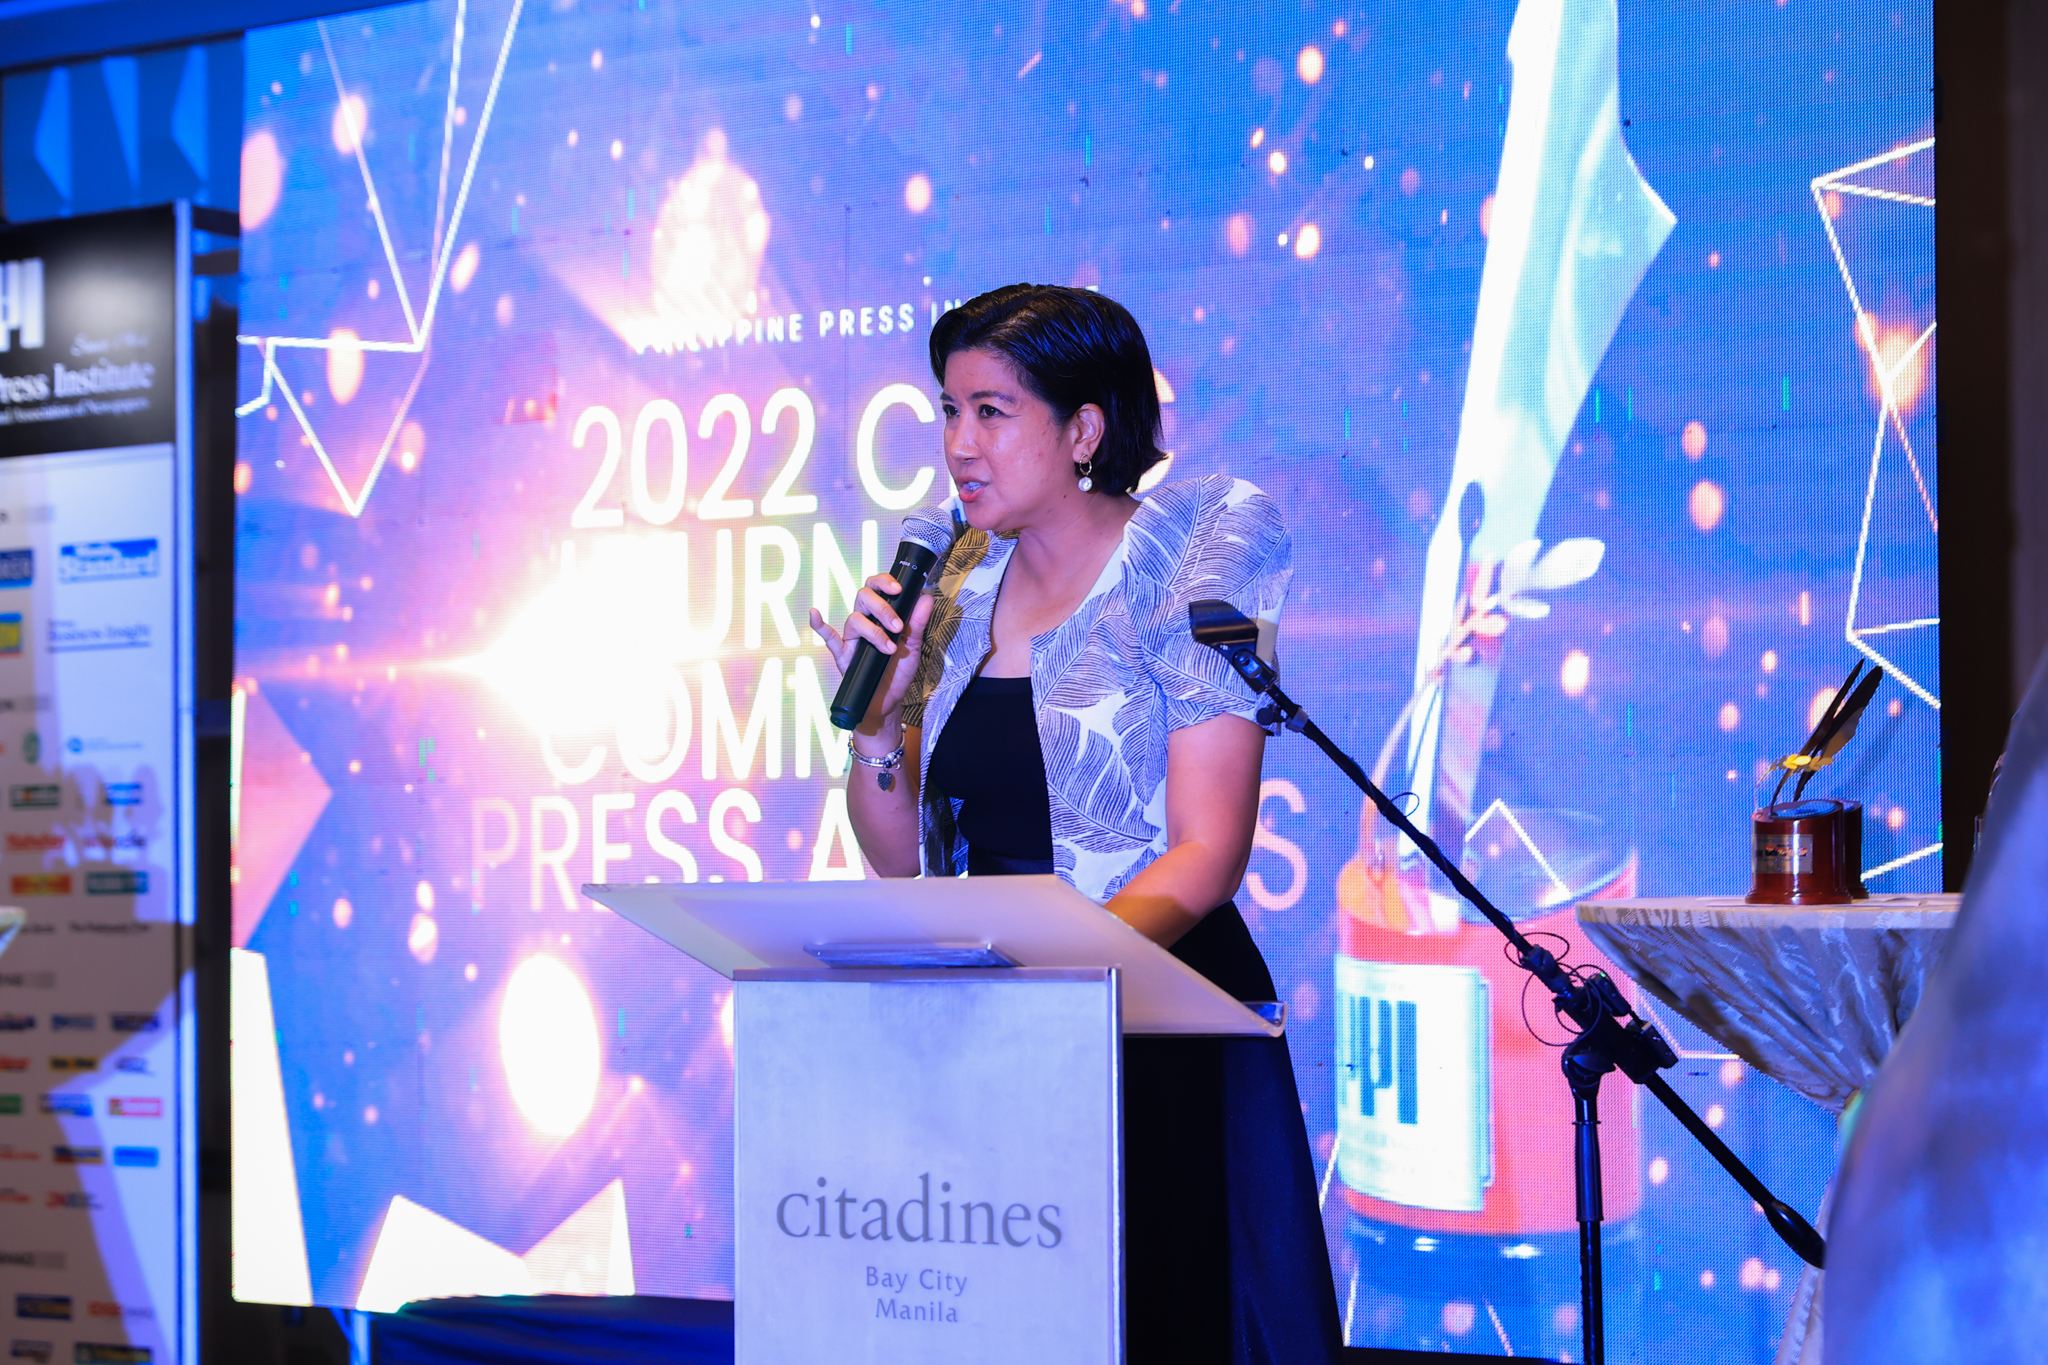 Ms. Kara David hosting the 2022 Civic Journalism Community Press Awards at Citadines Hotel, Bay City, Manila. Photo by Kier Labrador